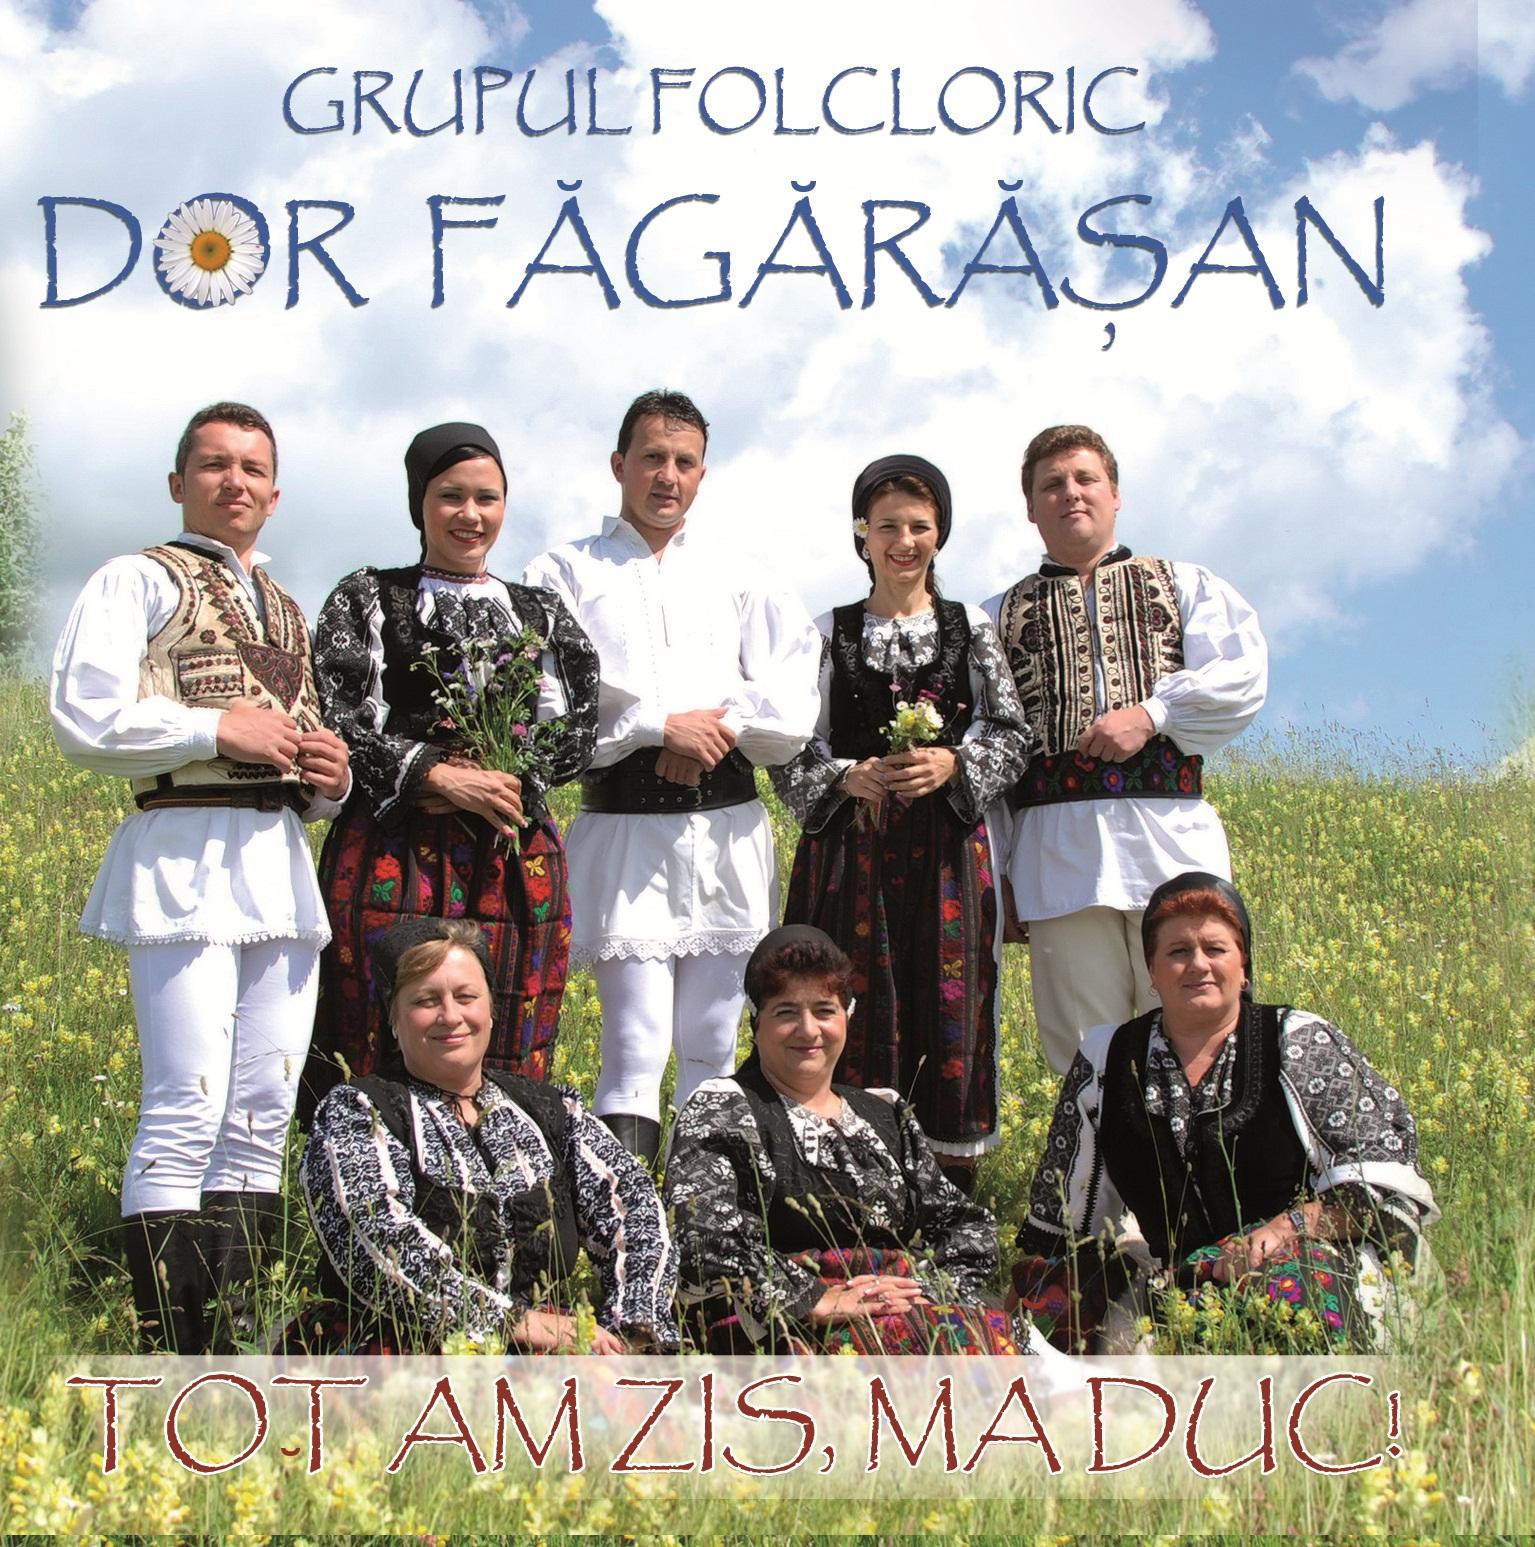 CD Grupul folcloric Dor Fagarasan - Tot am zis, ma duc